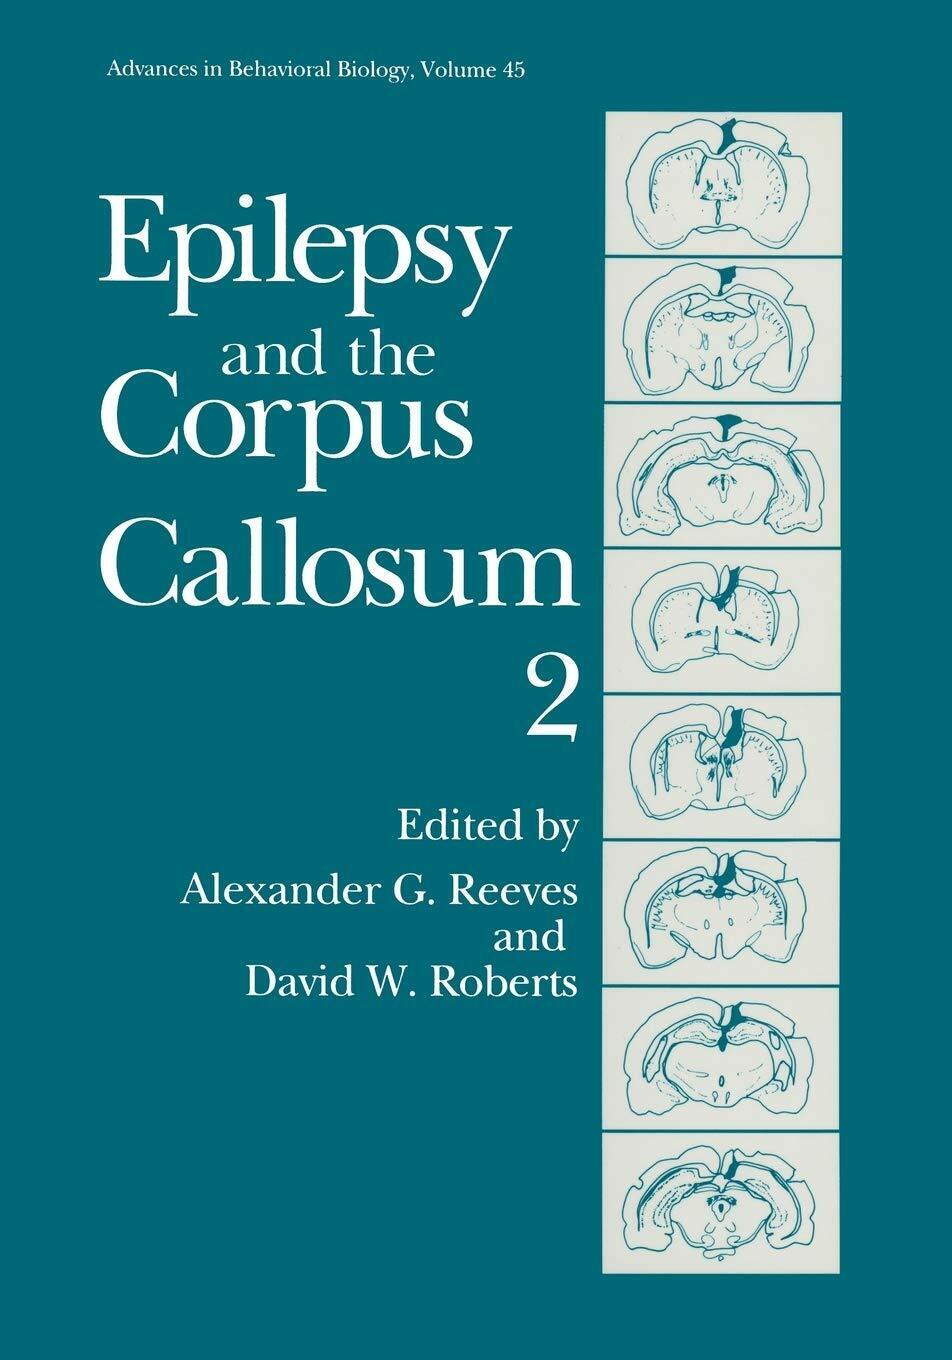 Epilepsy and the Corpus Callosum 2 - Alexander Reeves - Springer, 2013